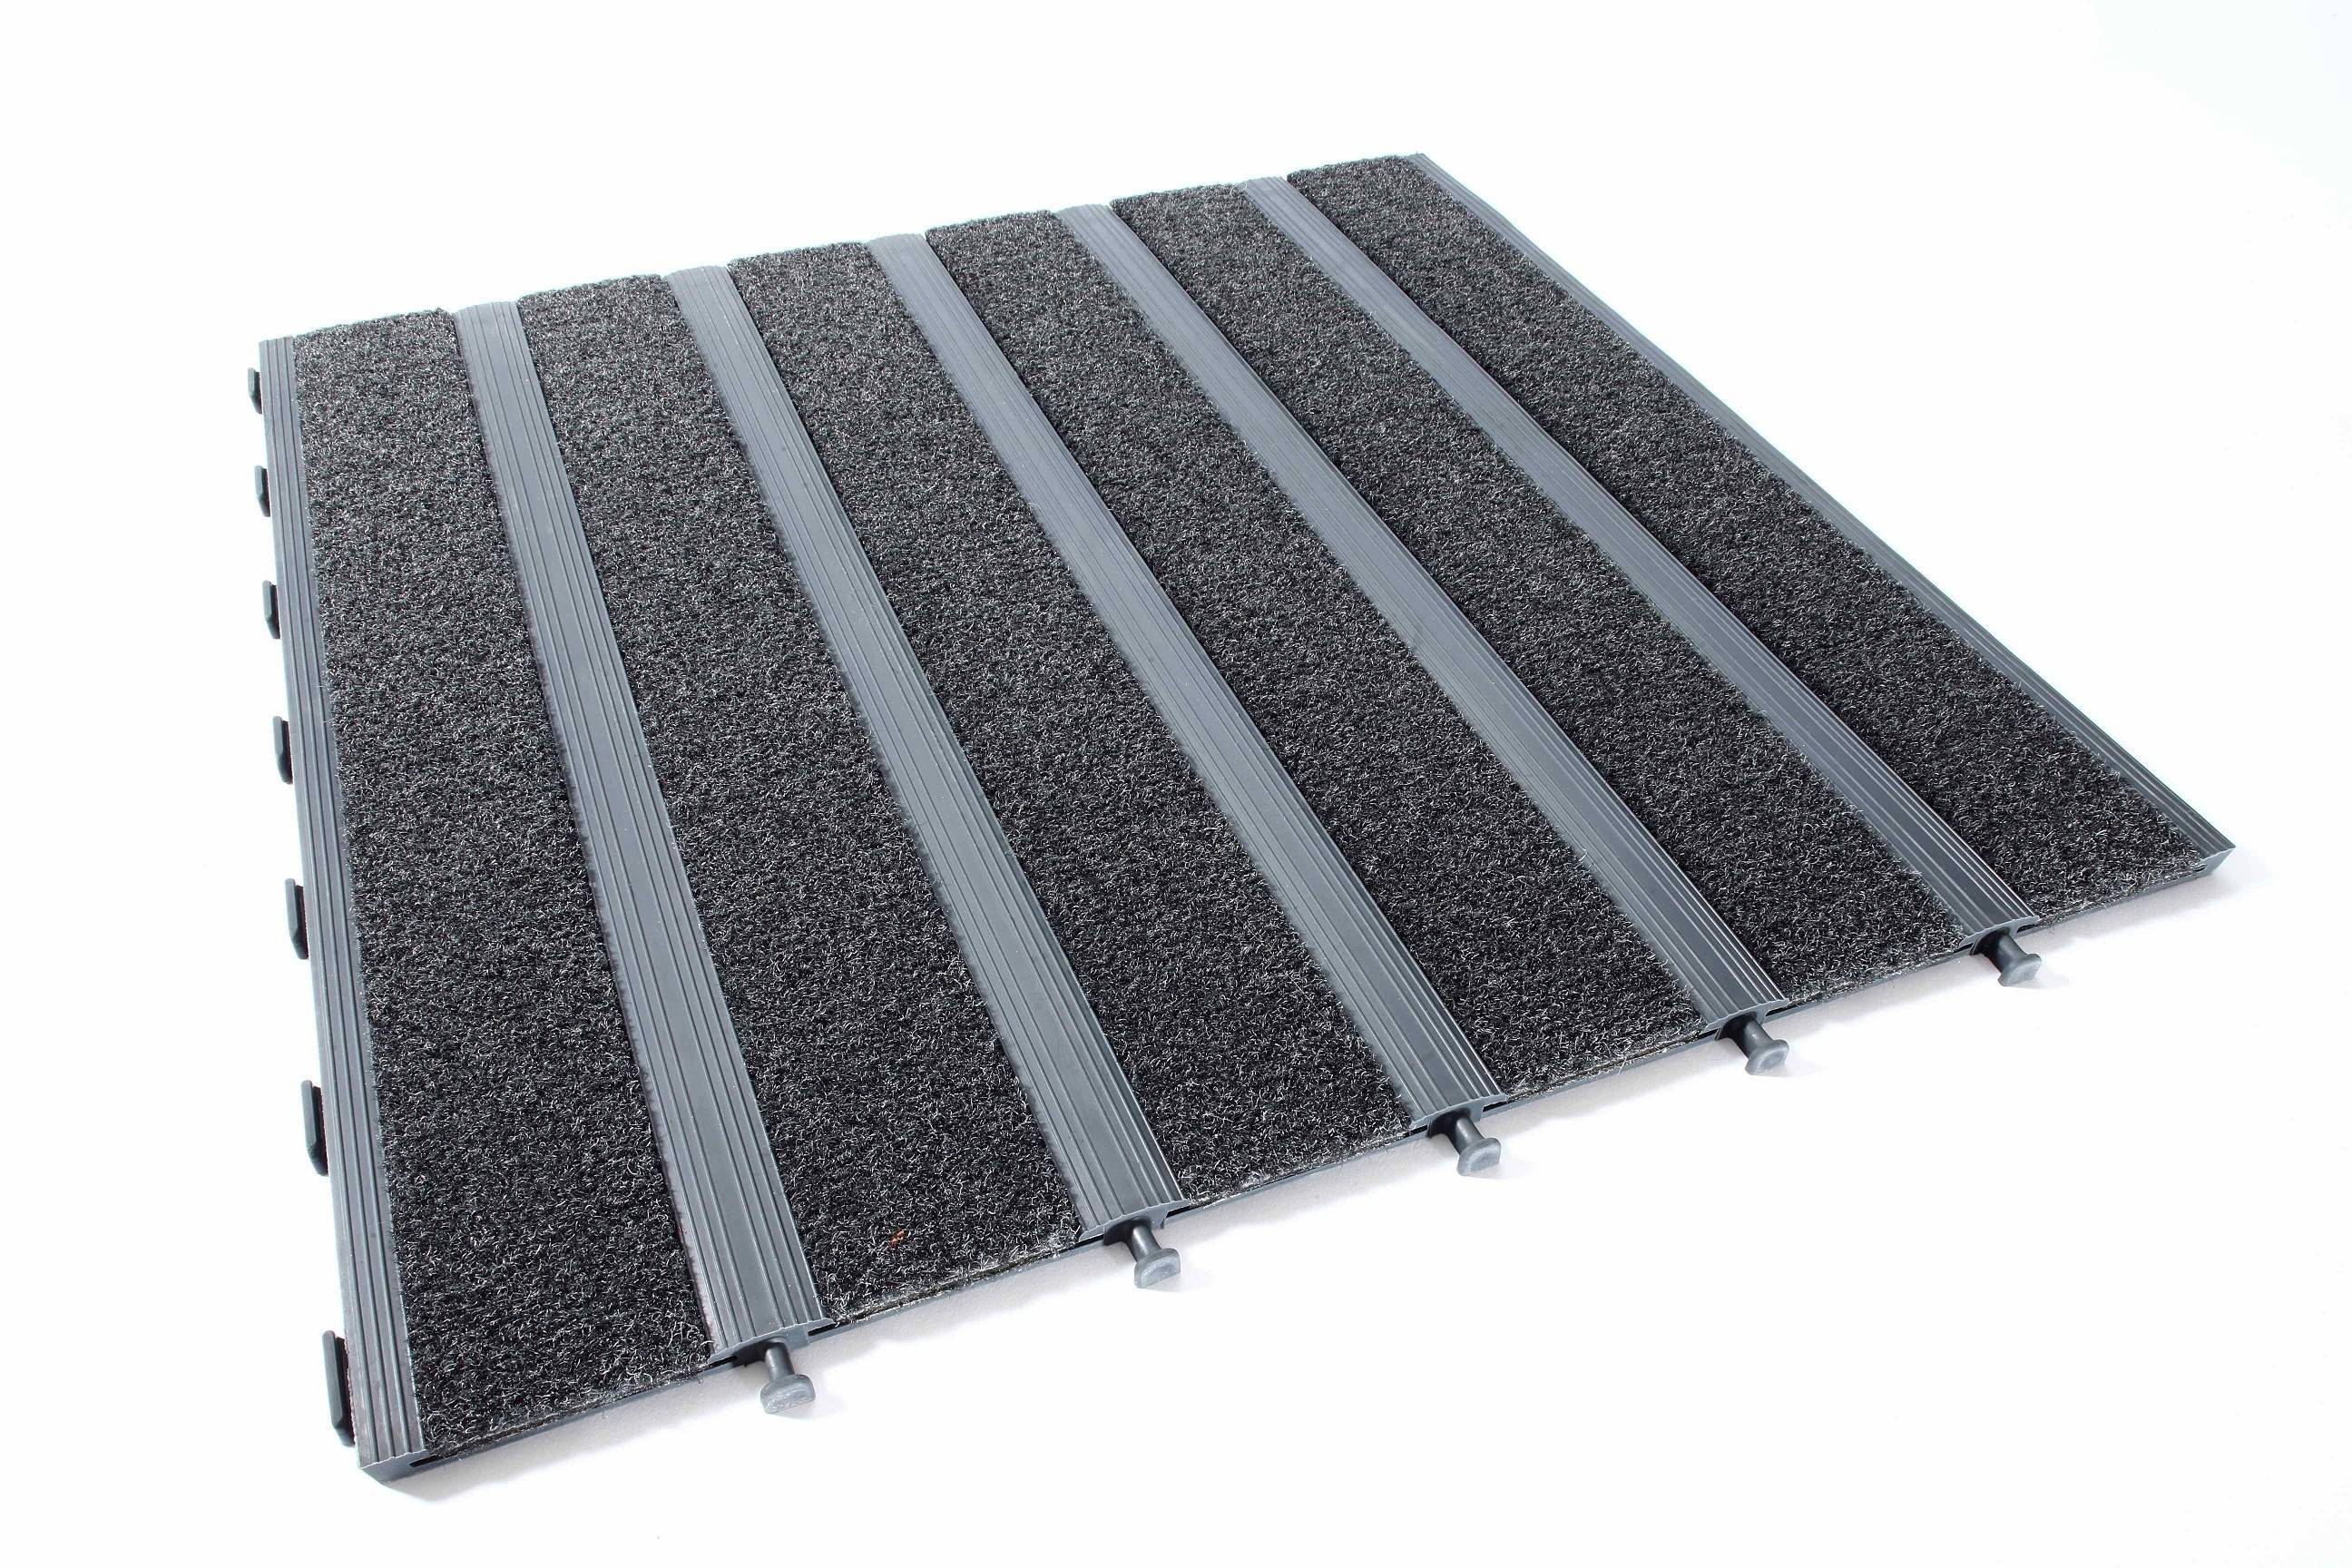 Paragon Entrack 50 Carpet Tile MW RIB Light Grey